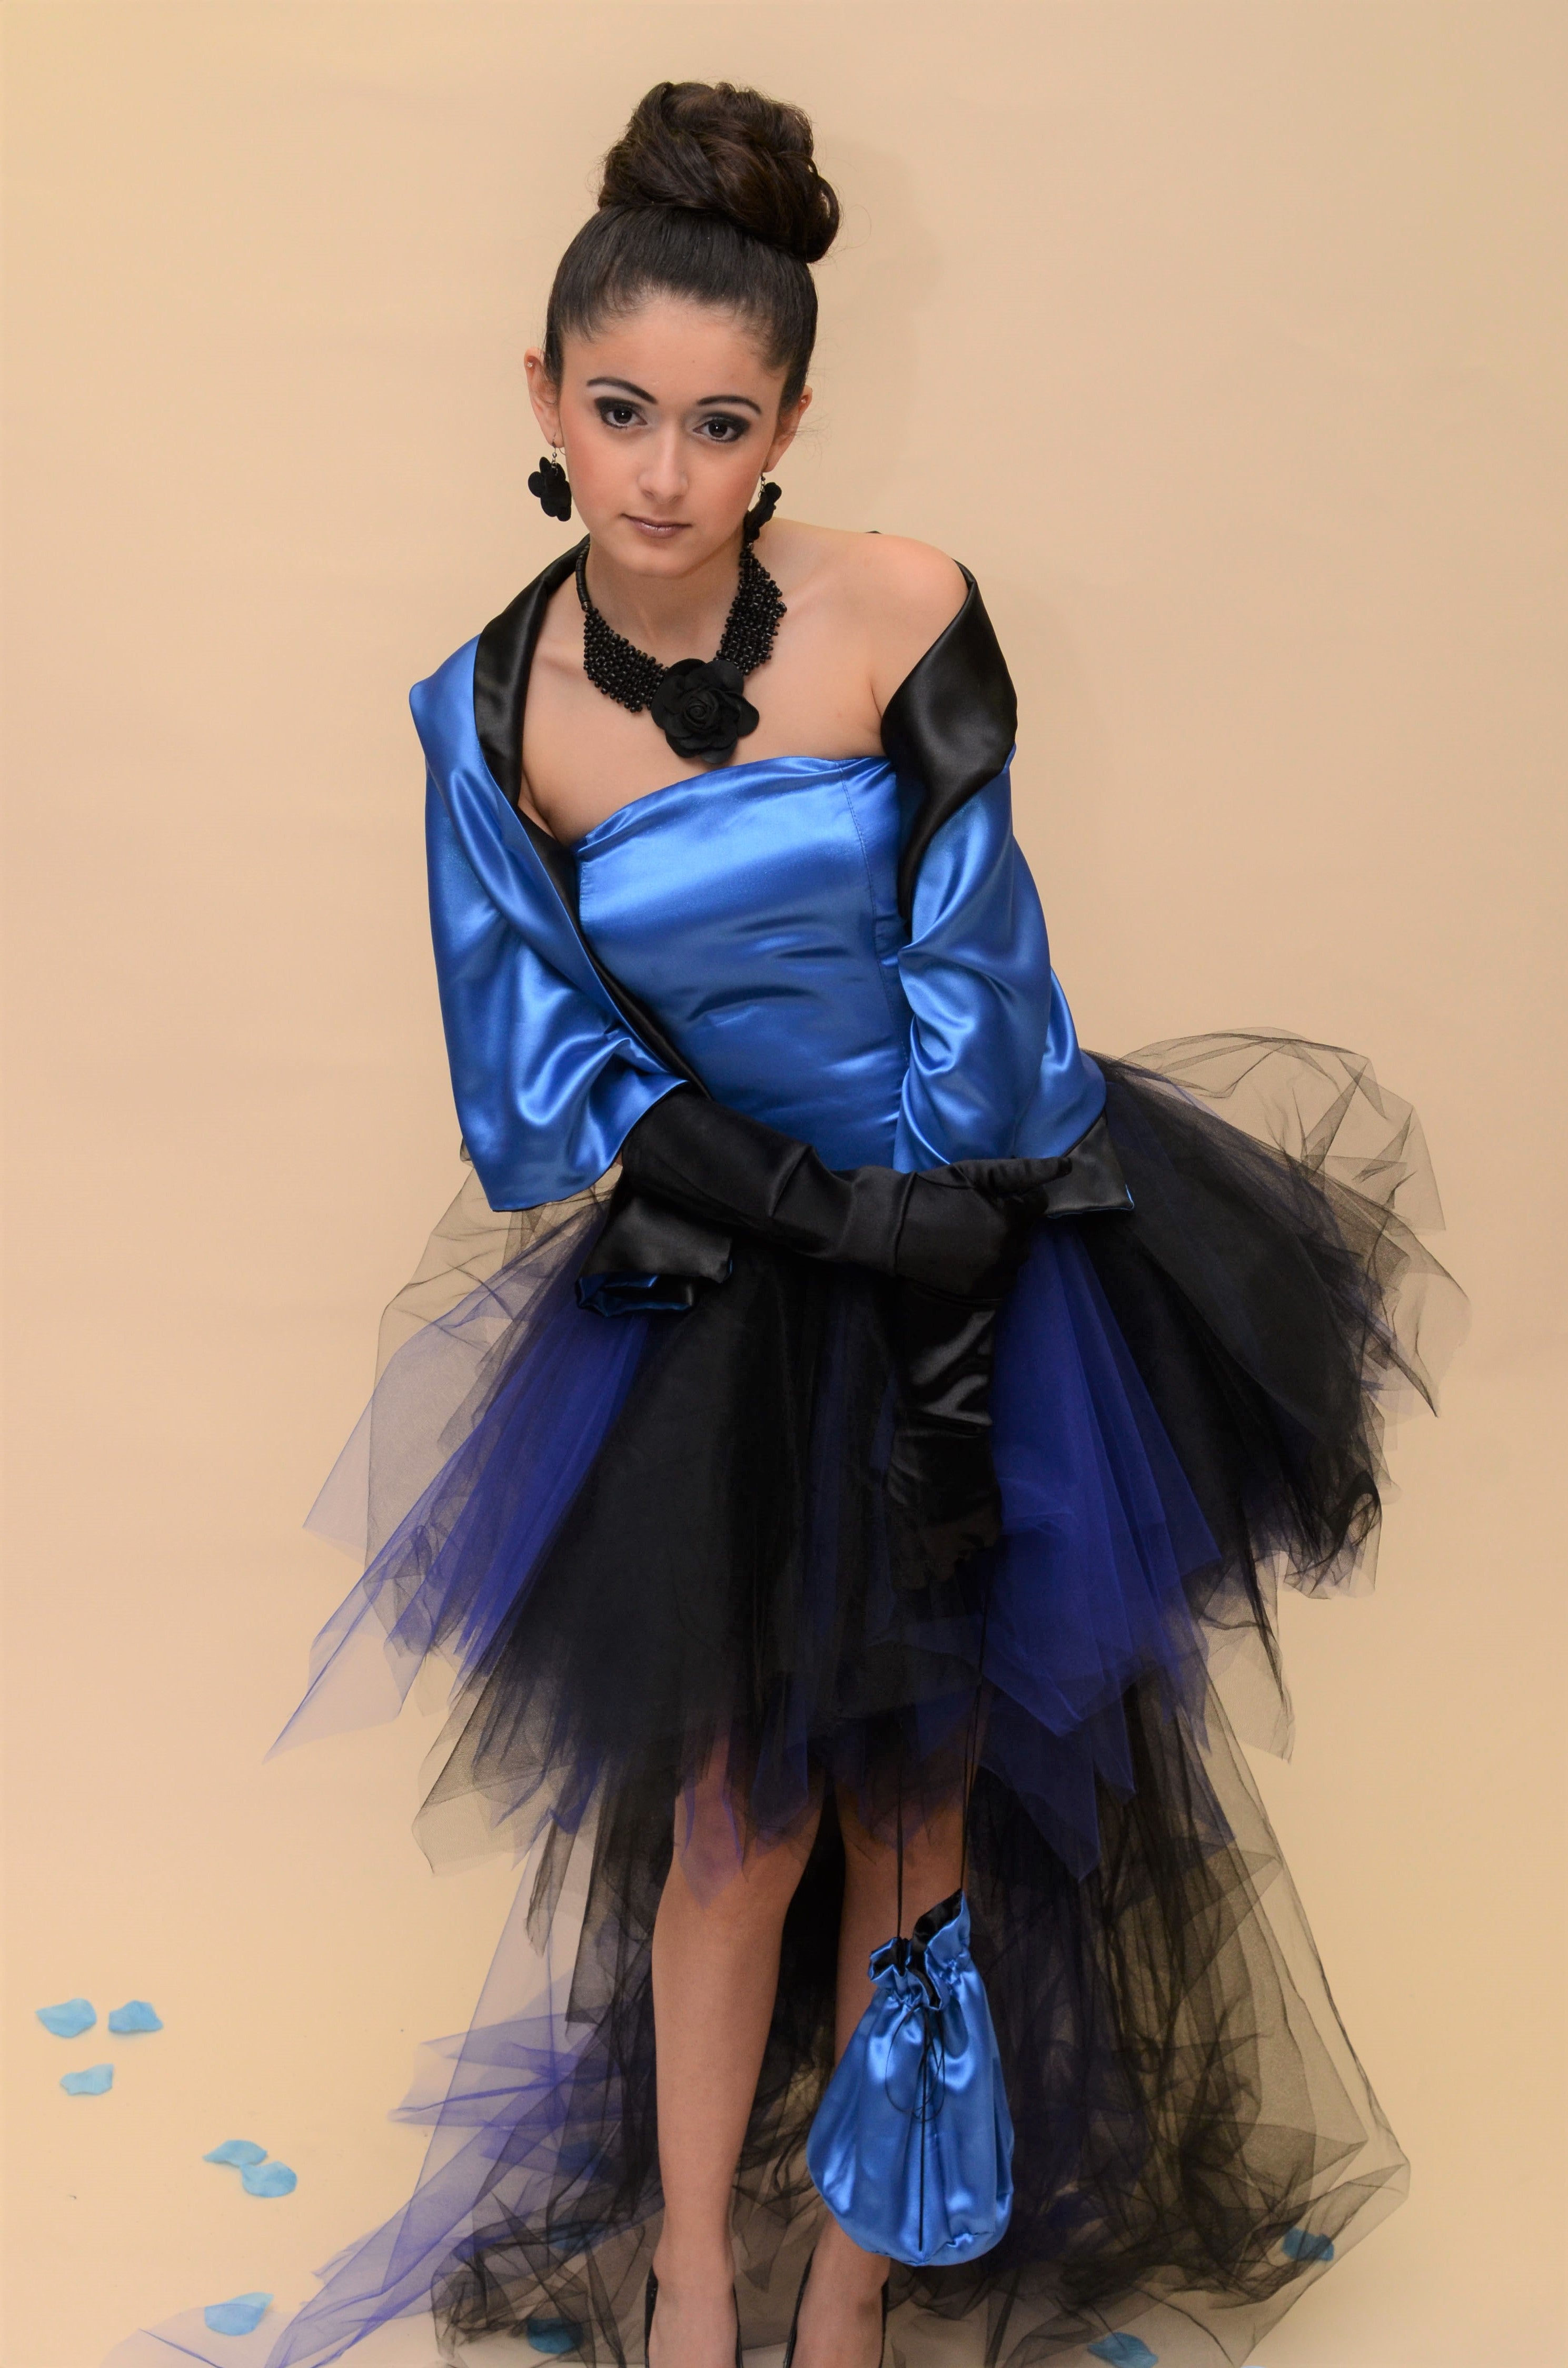 Royal Blue Bat Mitzvah Dress